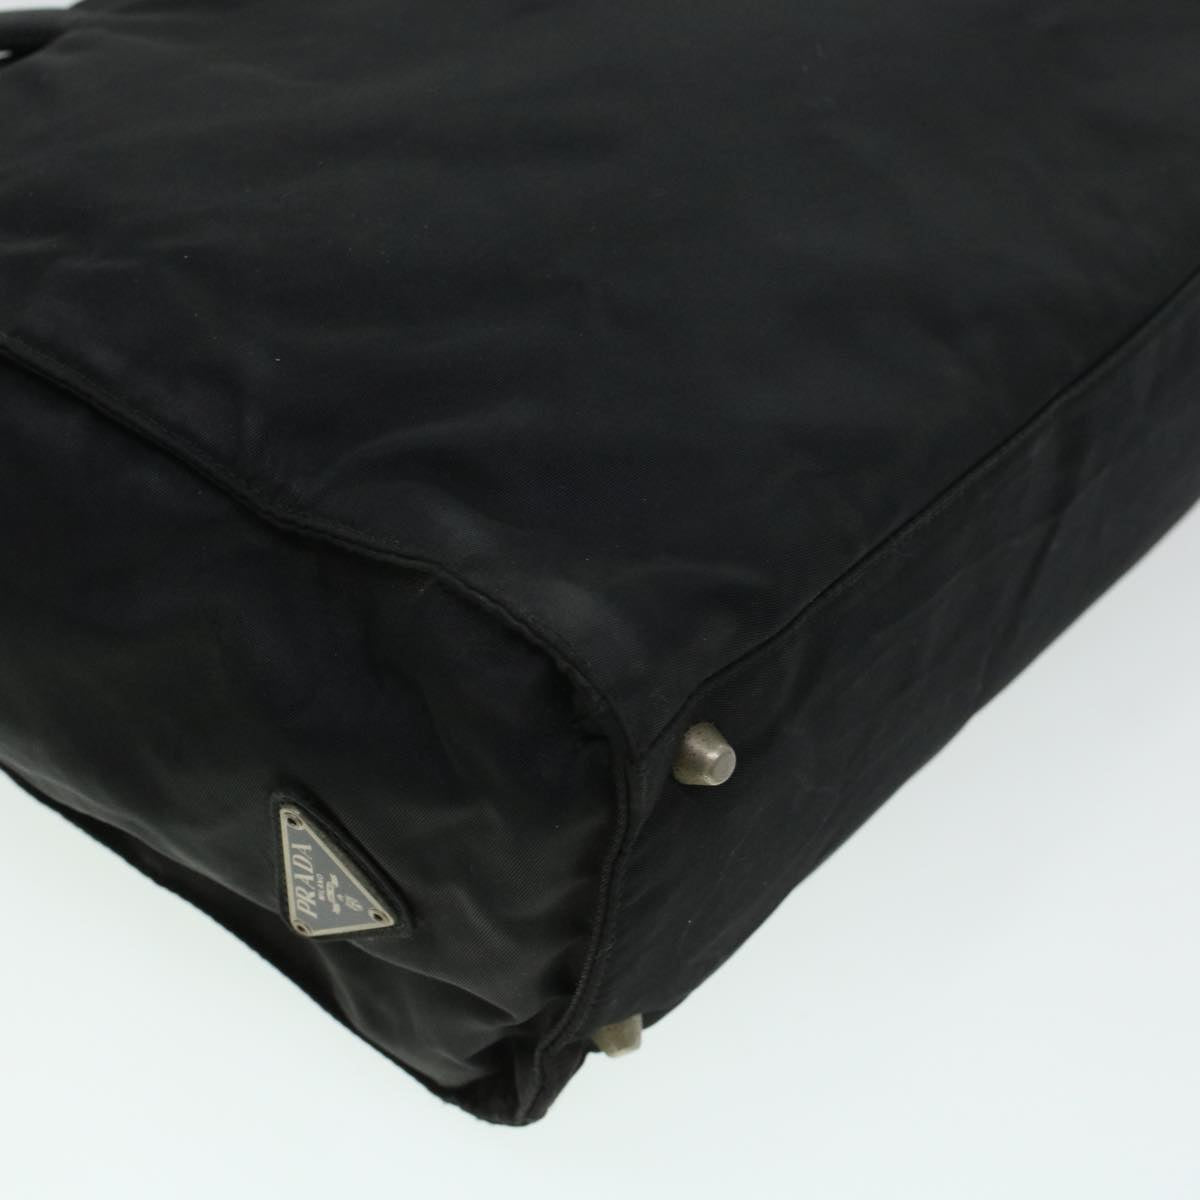 PRADA Tote Bag Nylon Black Auth ki3022